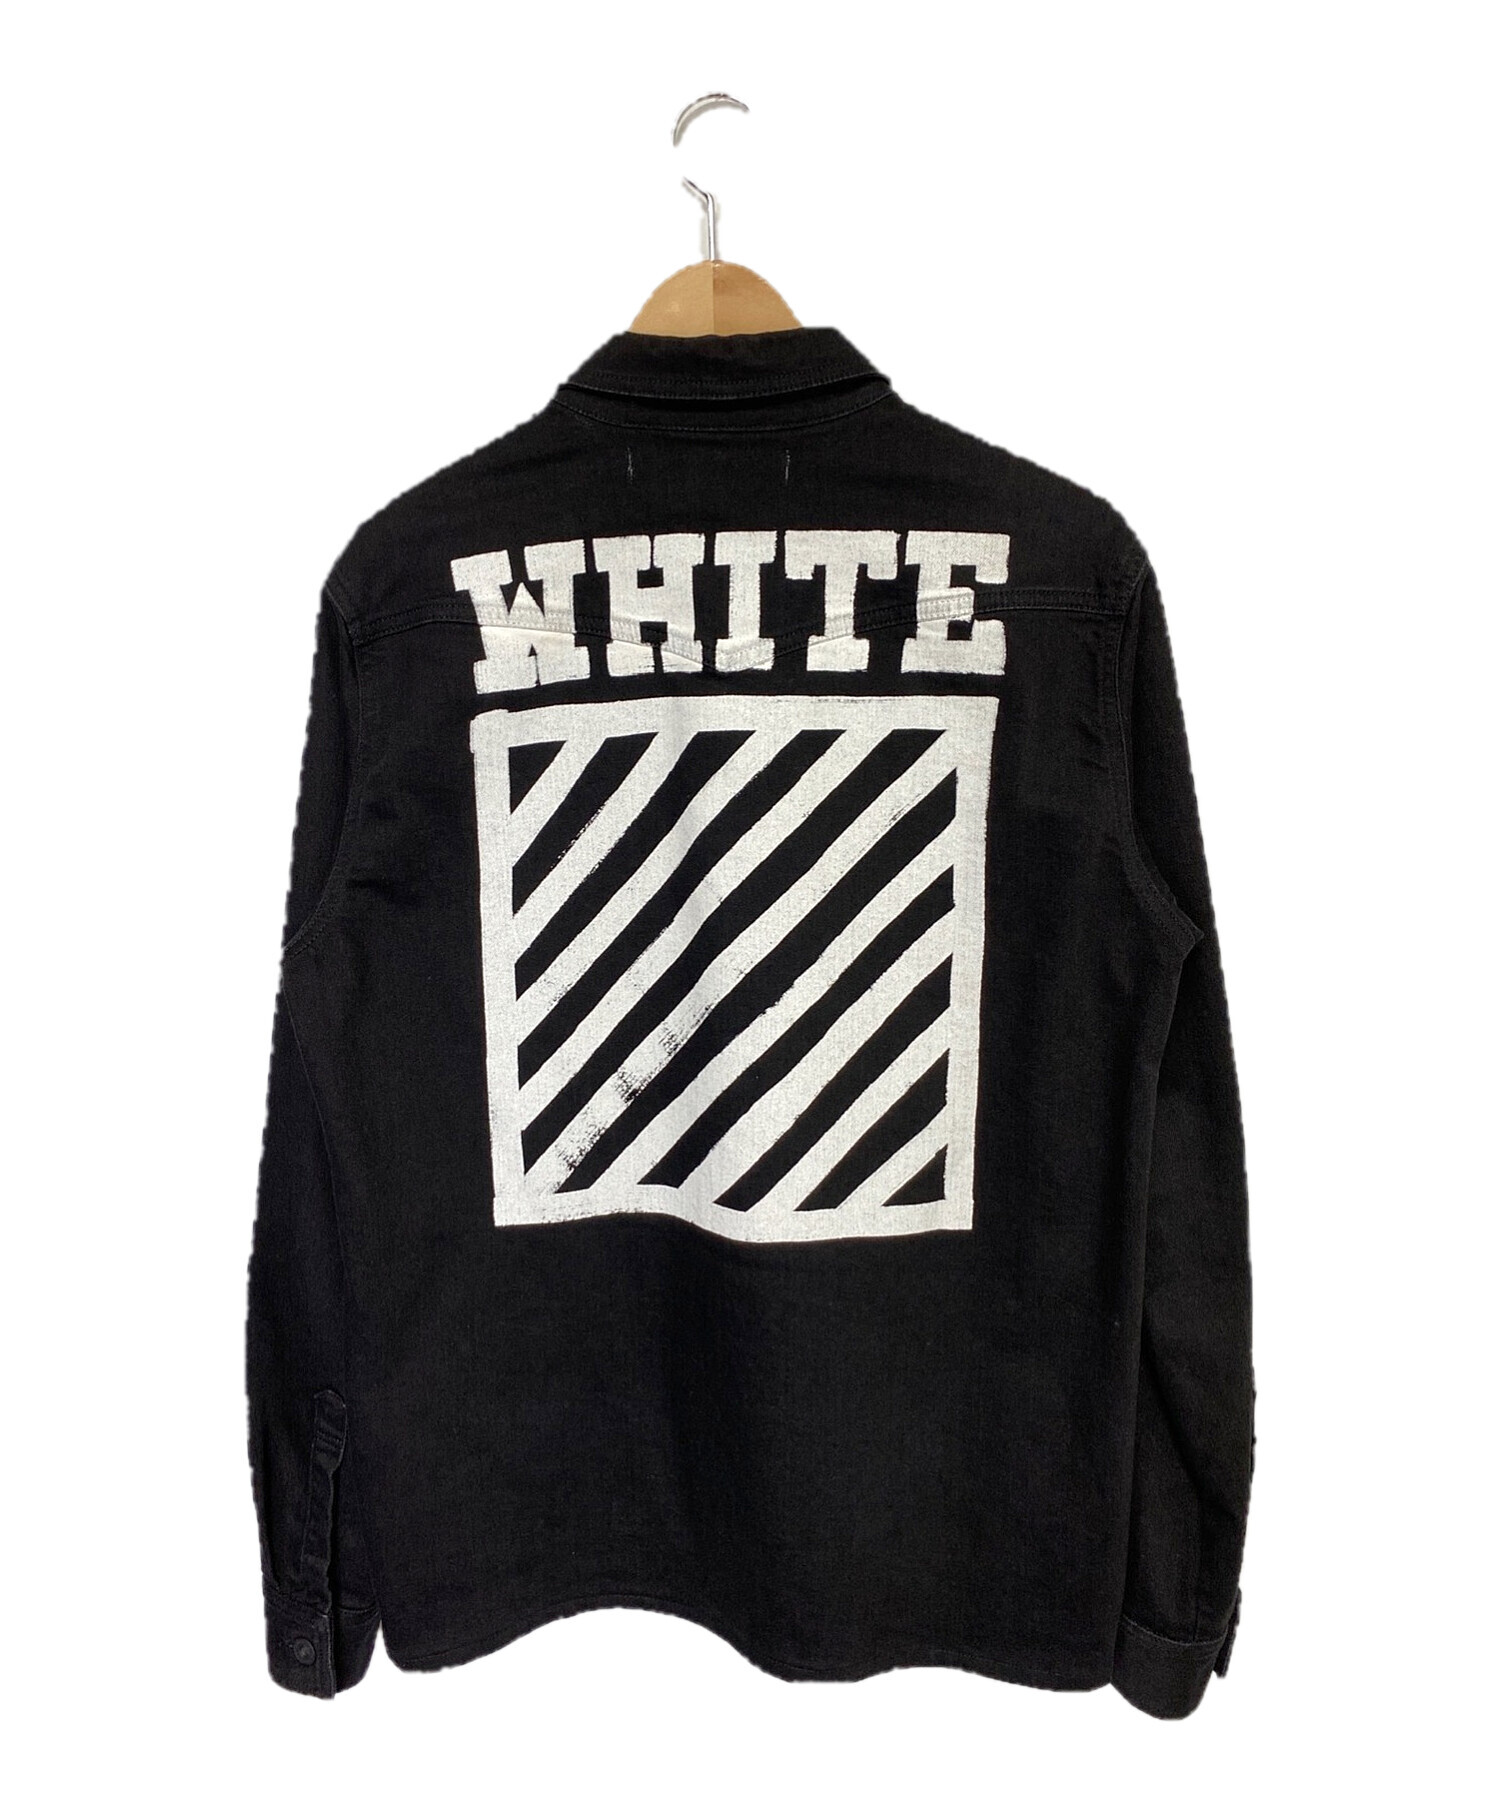 OFFWHITE (オフホワイト) ジャケット サイズ:XS